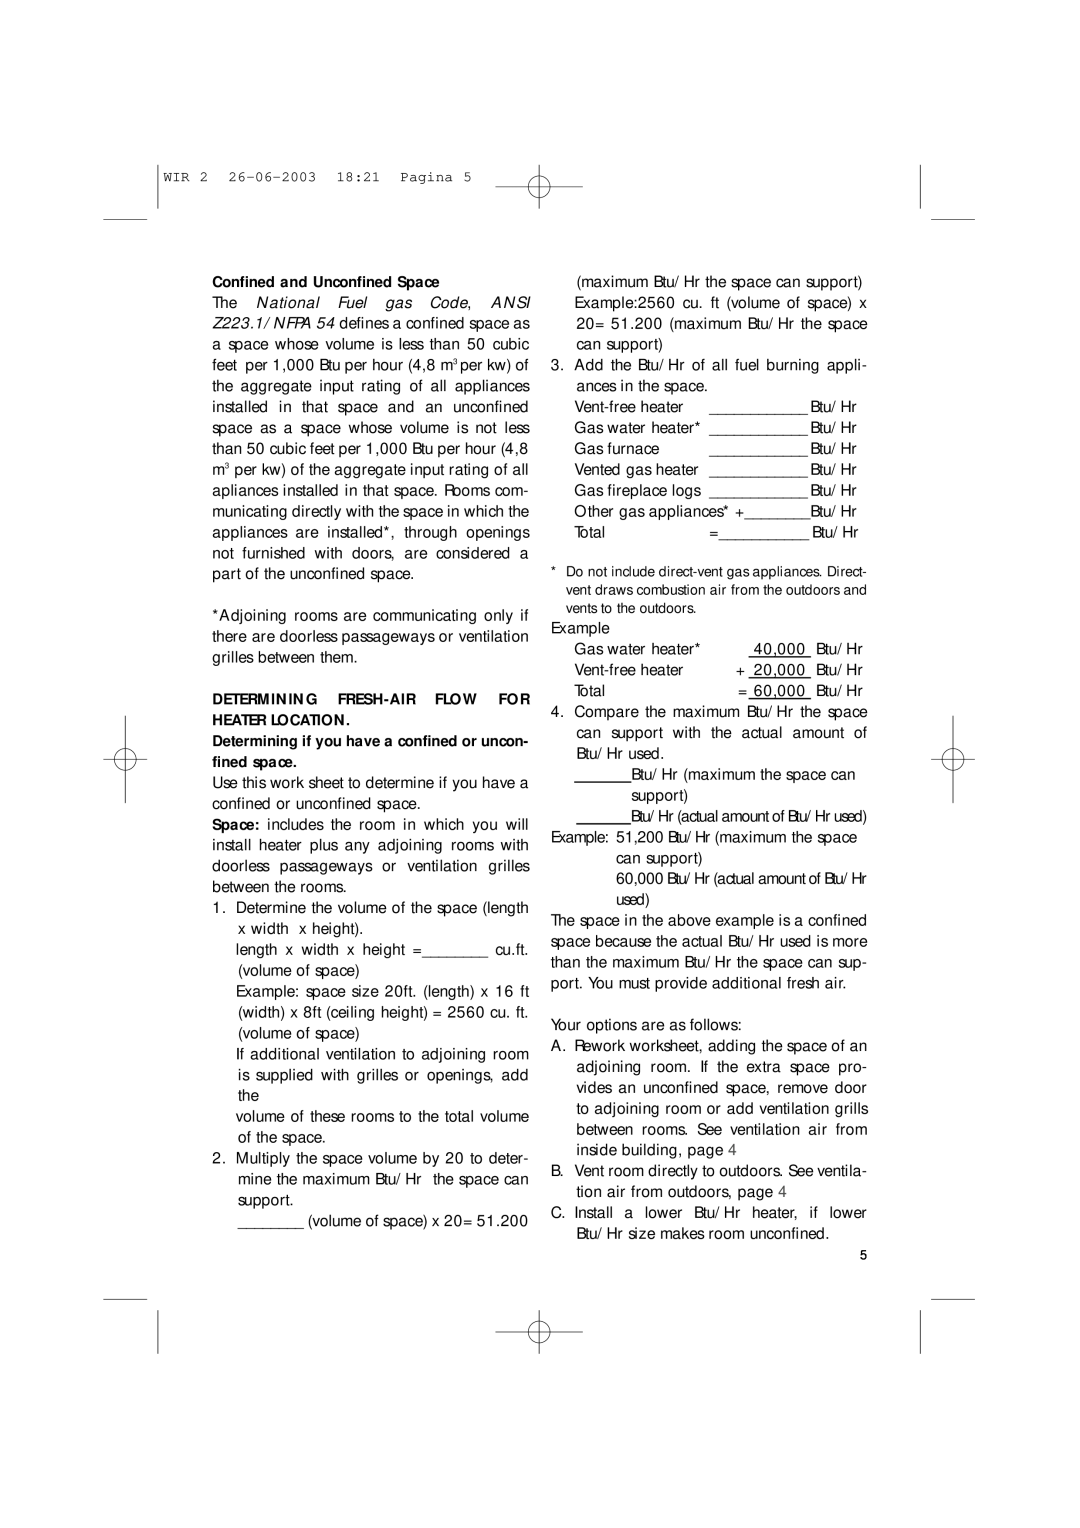 DeLonghi WIR2, WIR1 manual 